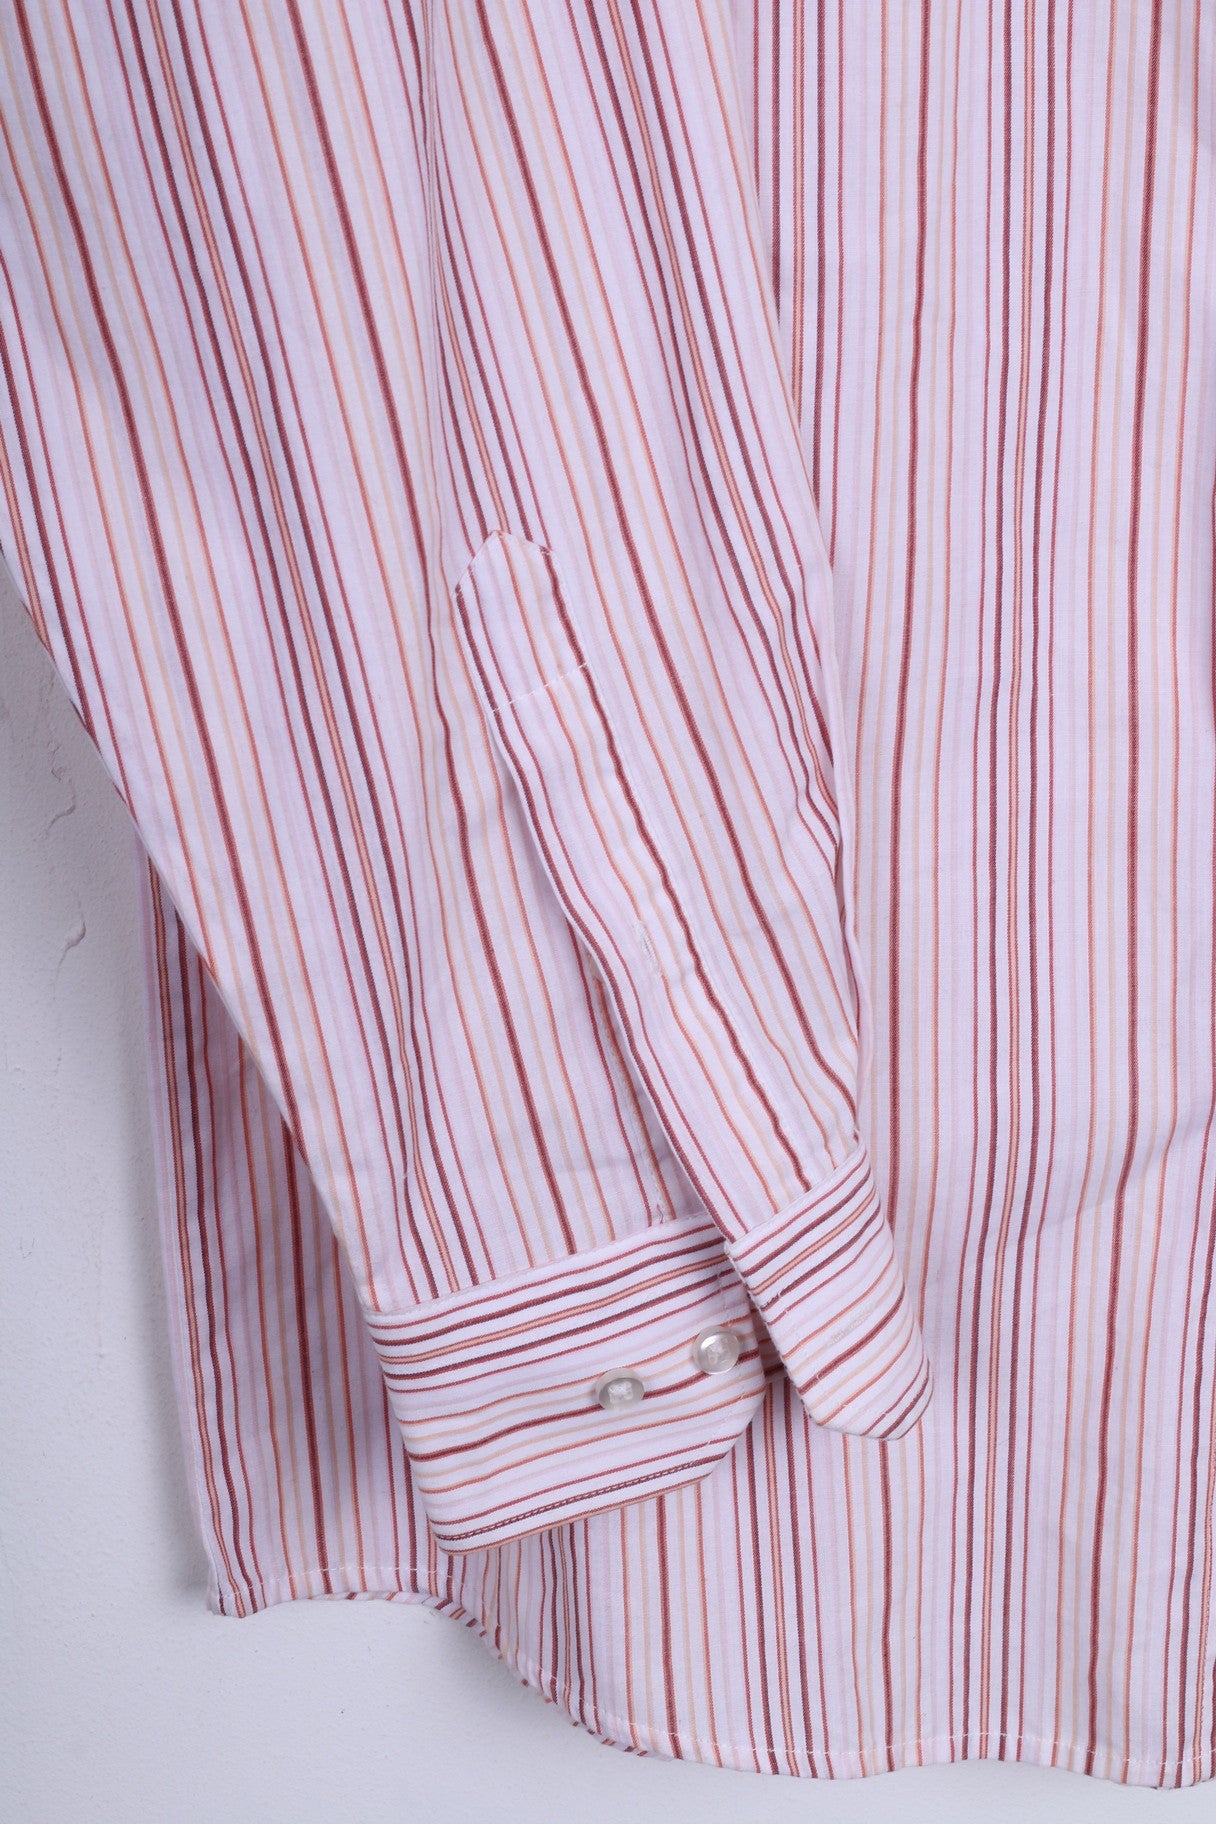 LORENZO CALVINO Milano Mens M 39 Casual Shirt Pink Cotton - RetrospectClothes